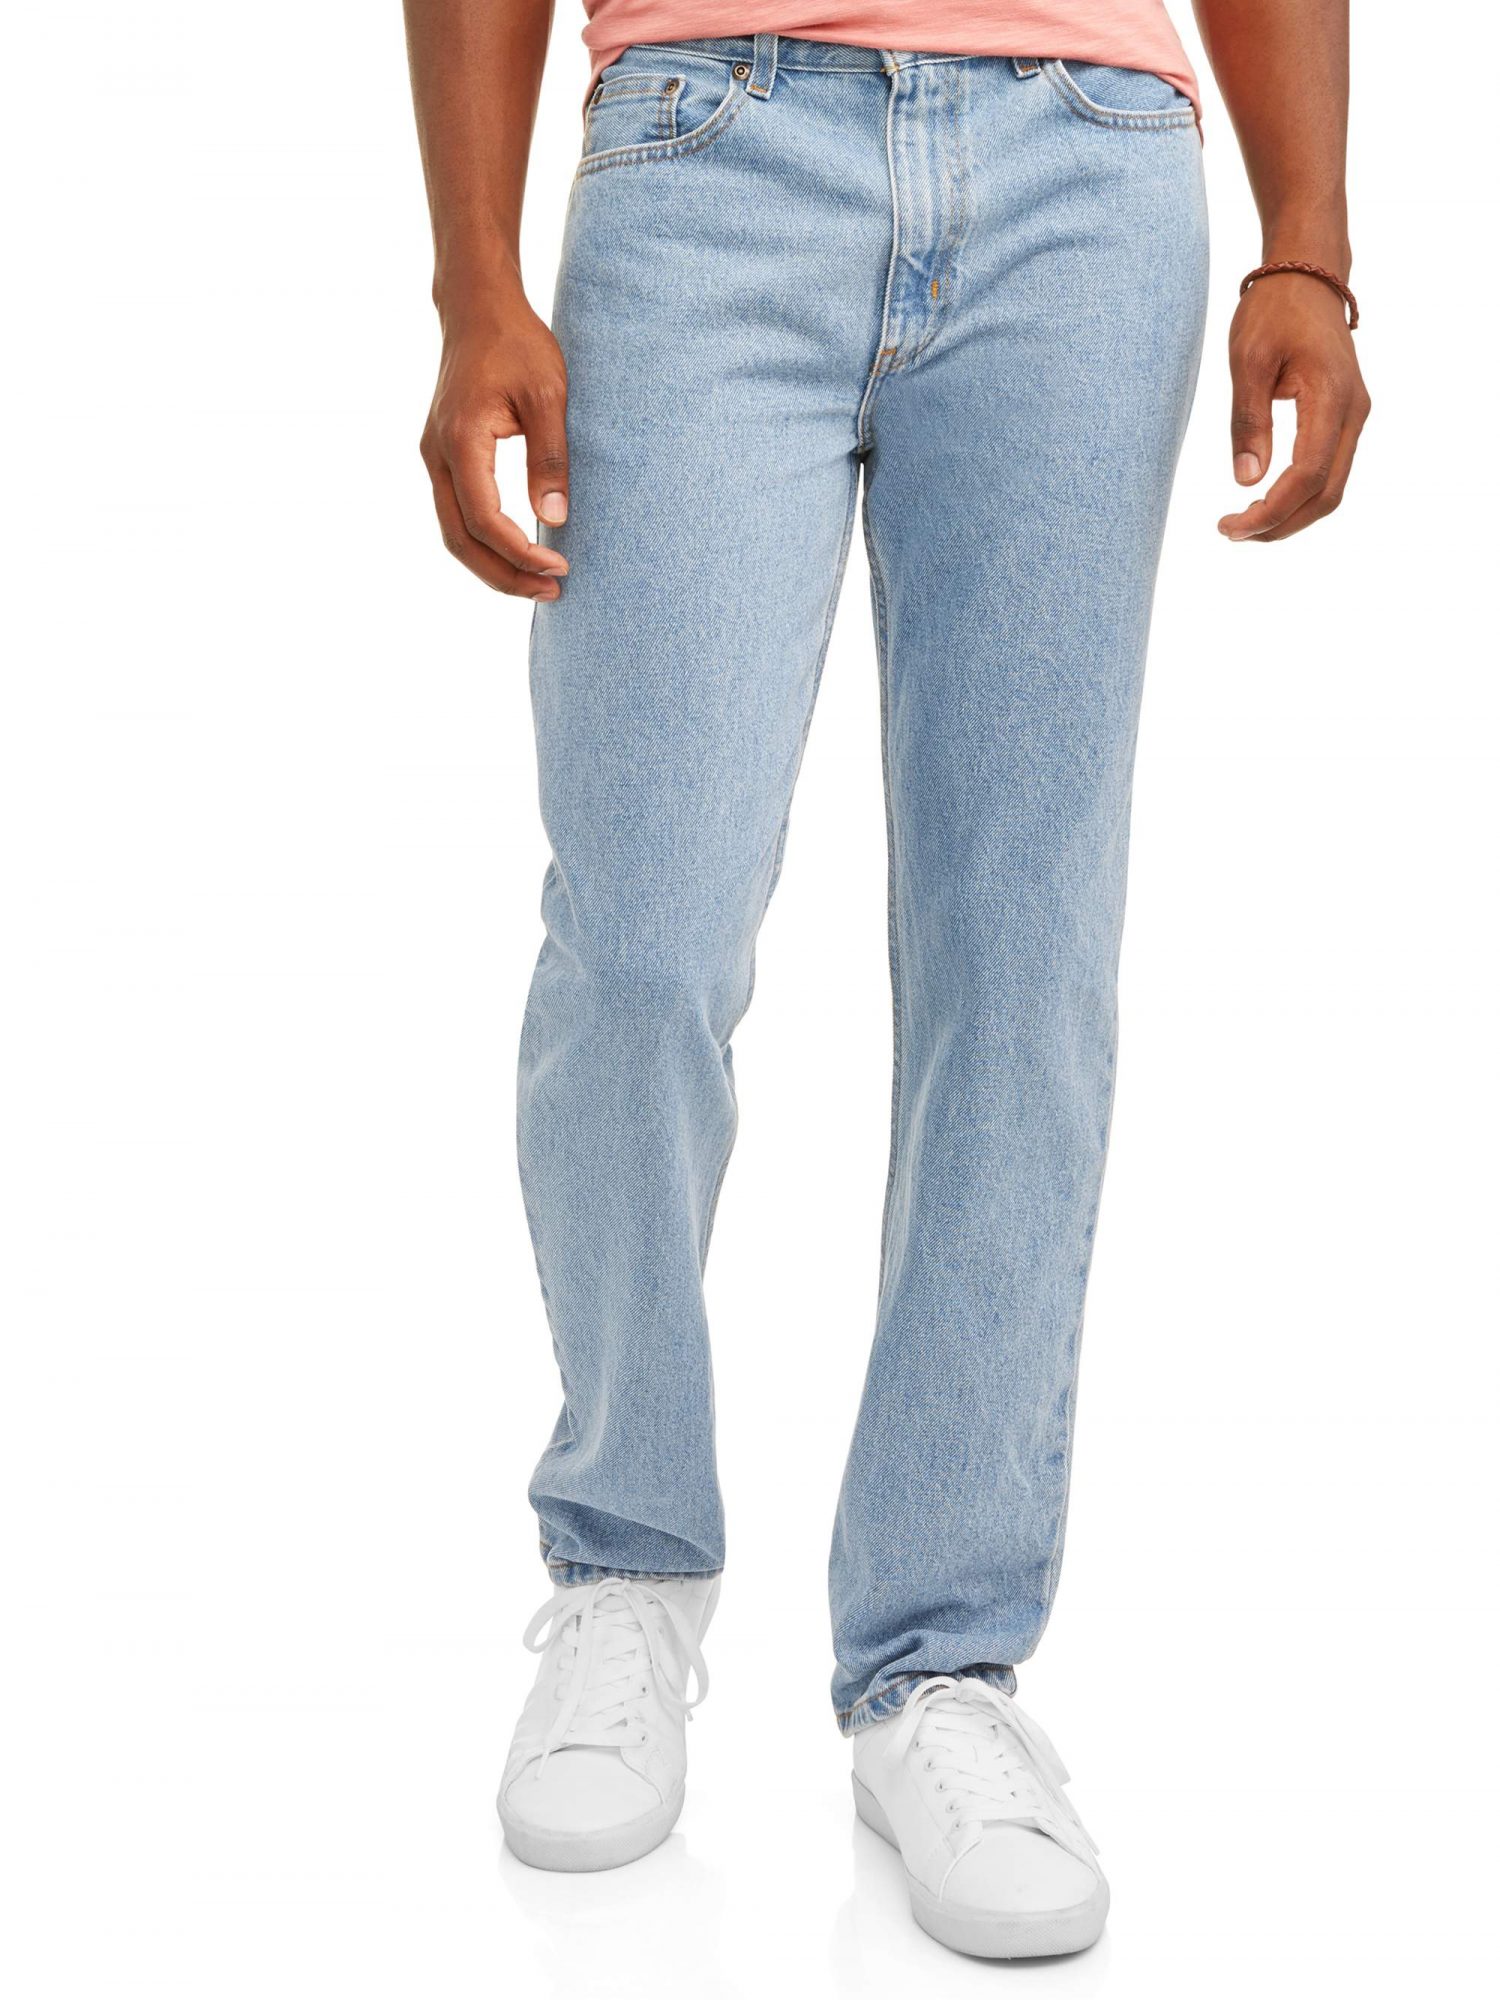 Lzard L,zard Mens Regular Fit Blue Jeans - Buy Lzard L,zard Mens Regular Fit  Blue Jeans online in India